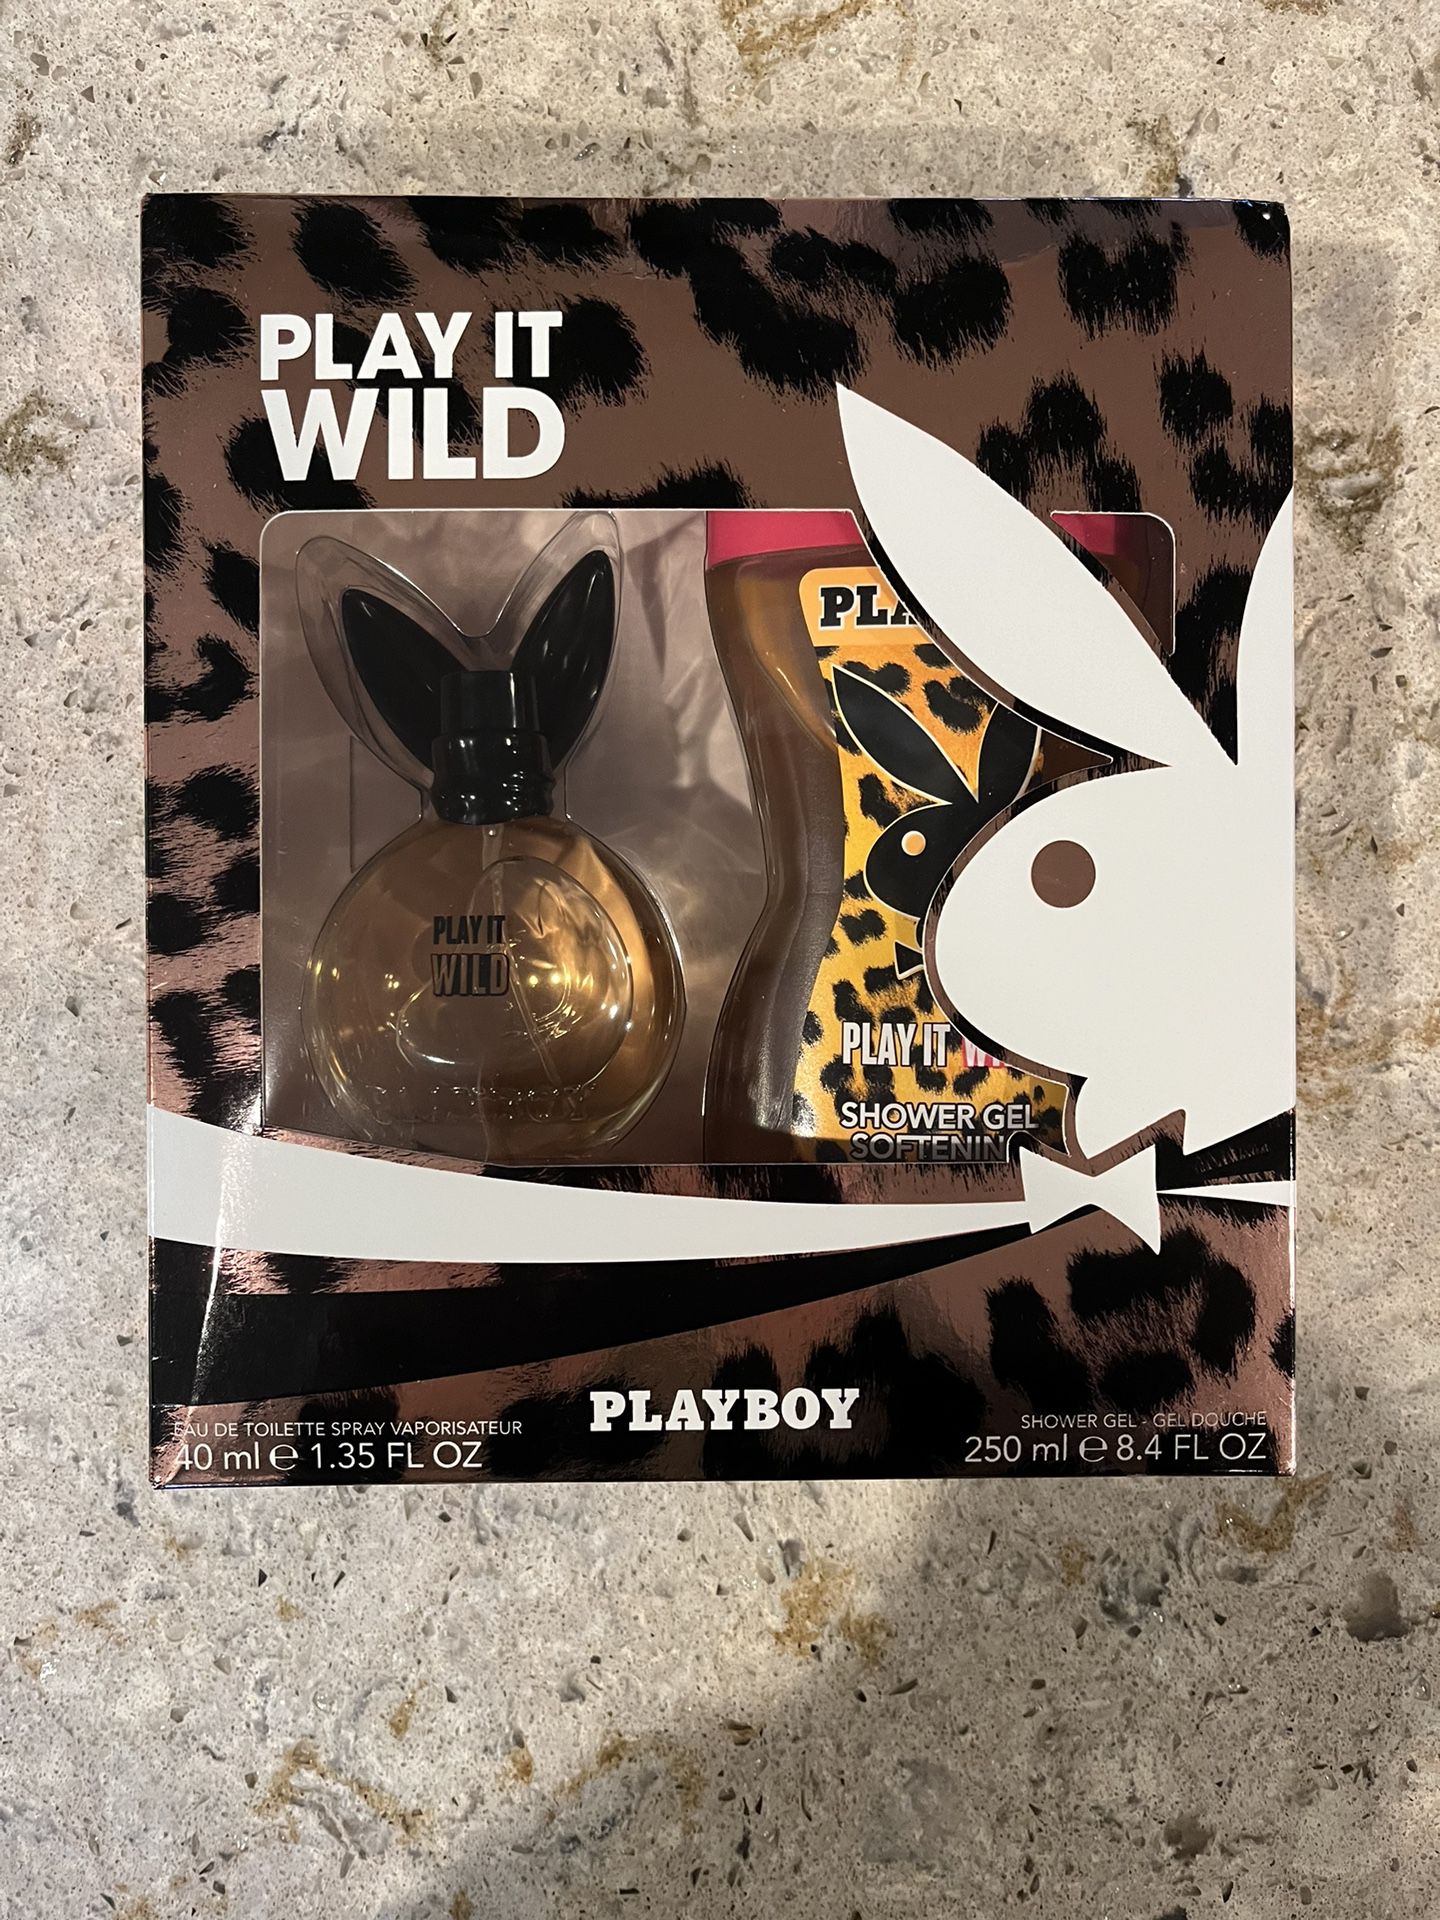 Playboy Play It Wild Eau de Toilette Spray and Shower Gel - Brand New 